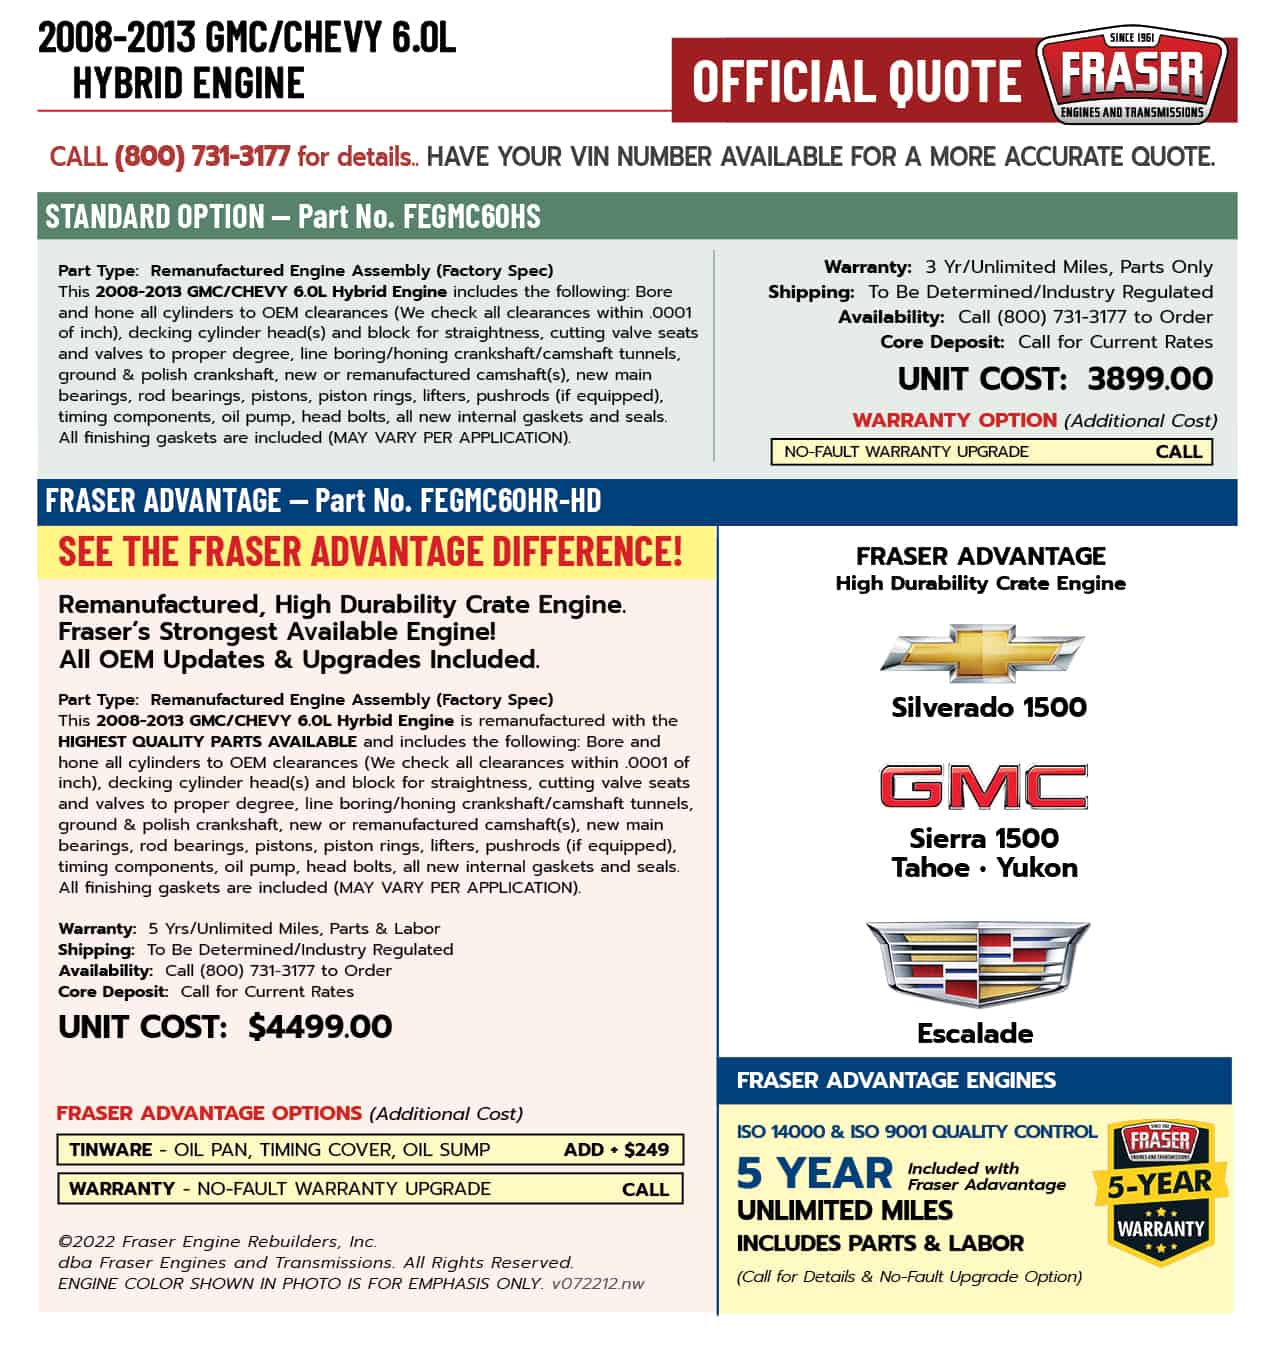 2008-2013 GMC/Chevy 6.0 Liter Hybrid Engines (Silverado 1500, Sierra 1500, Tahoe, Yukon, Escalade)